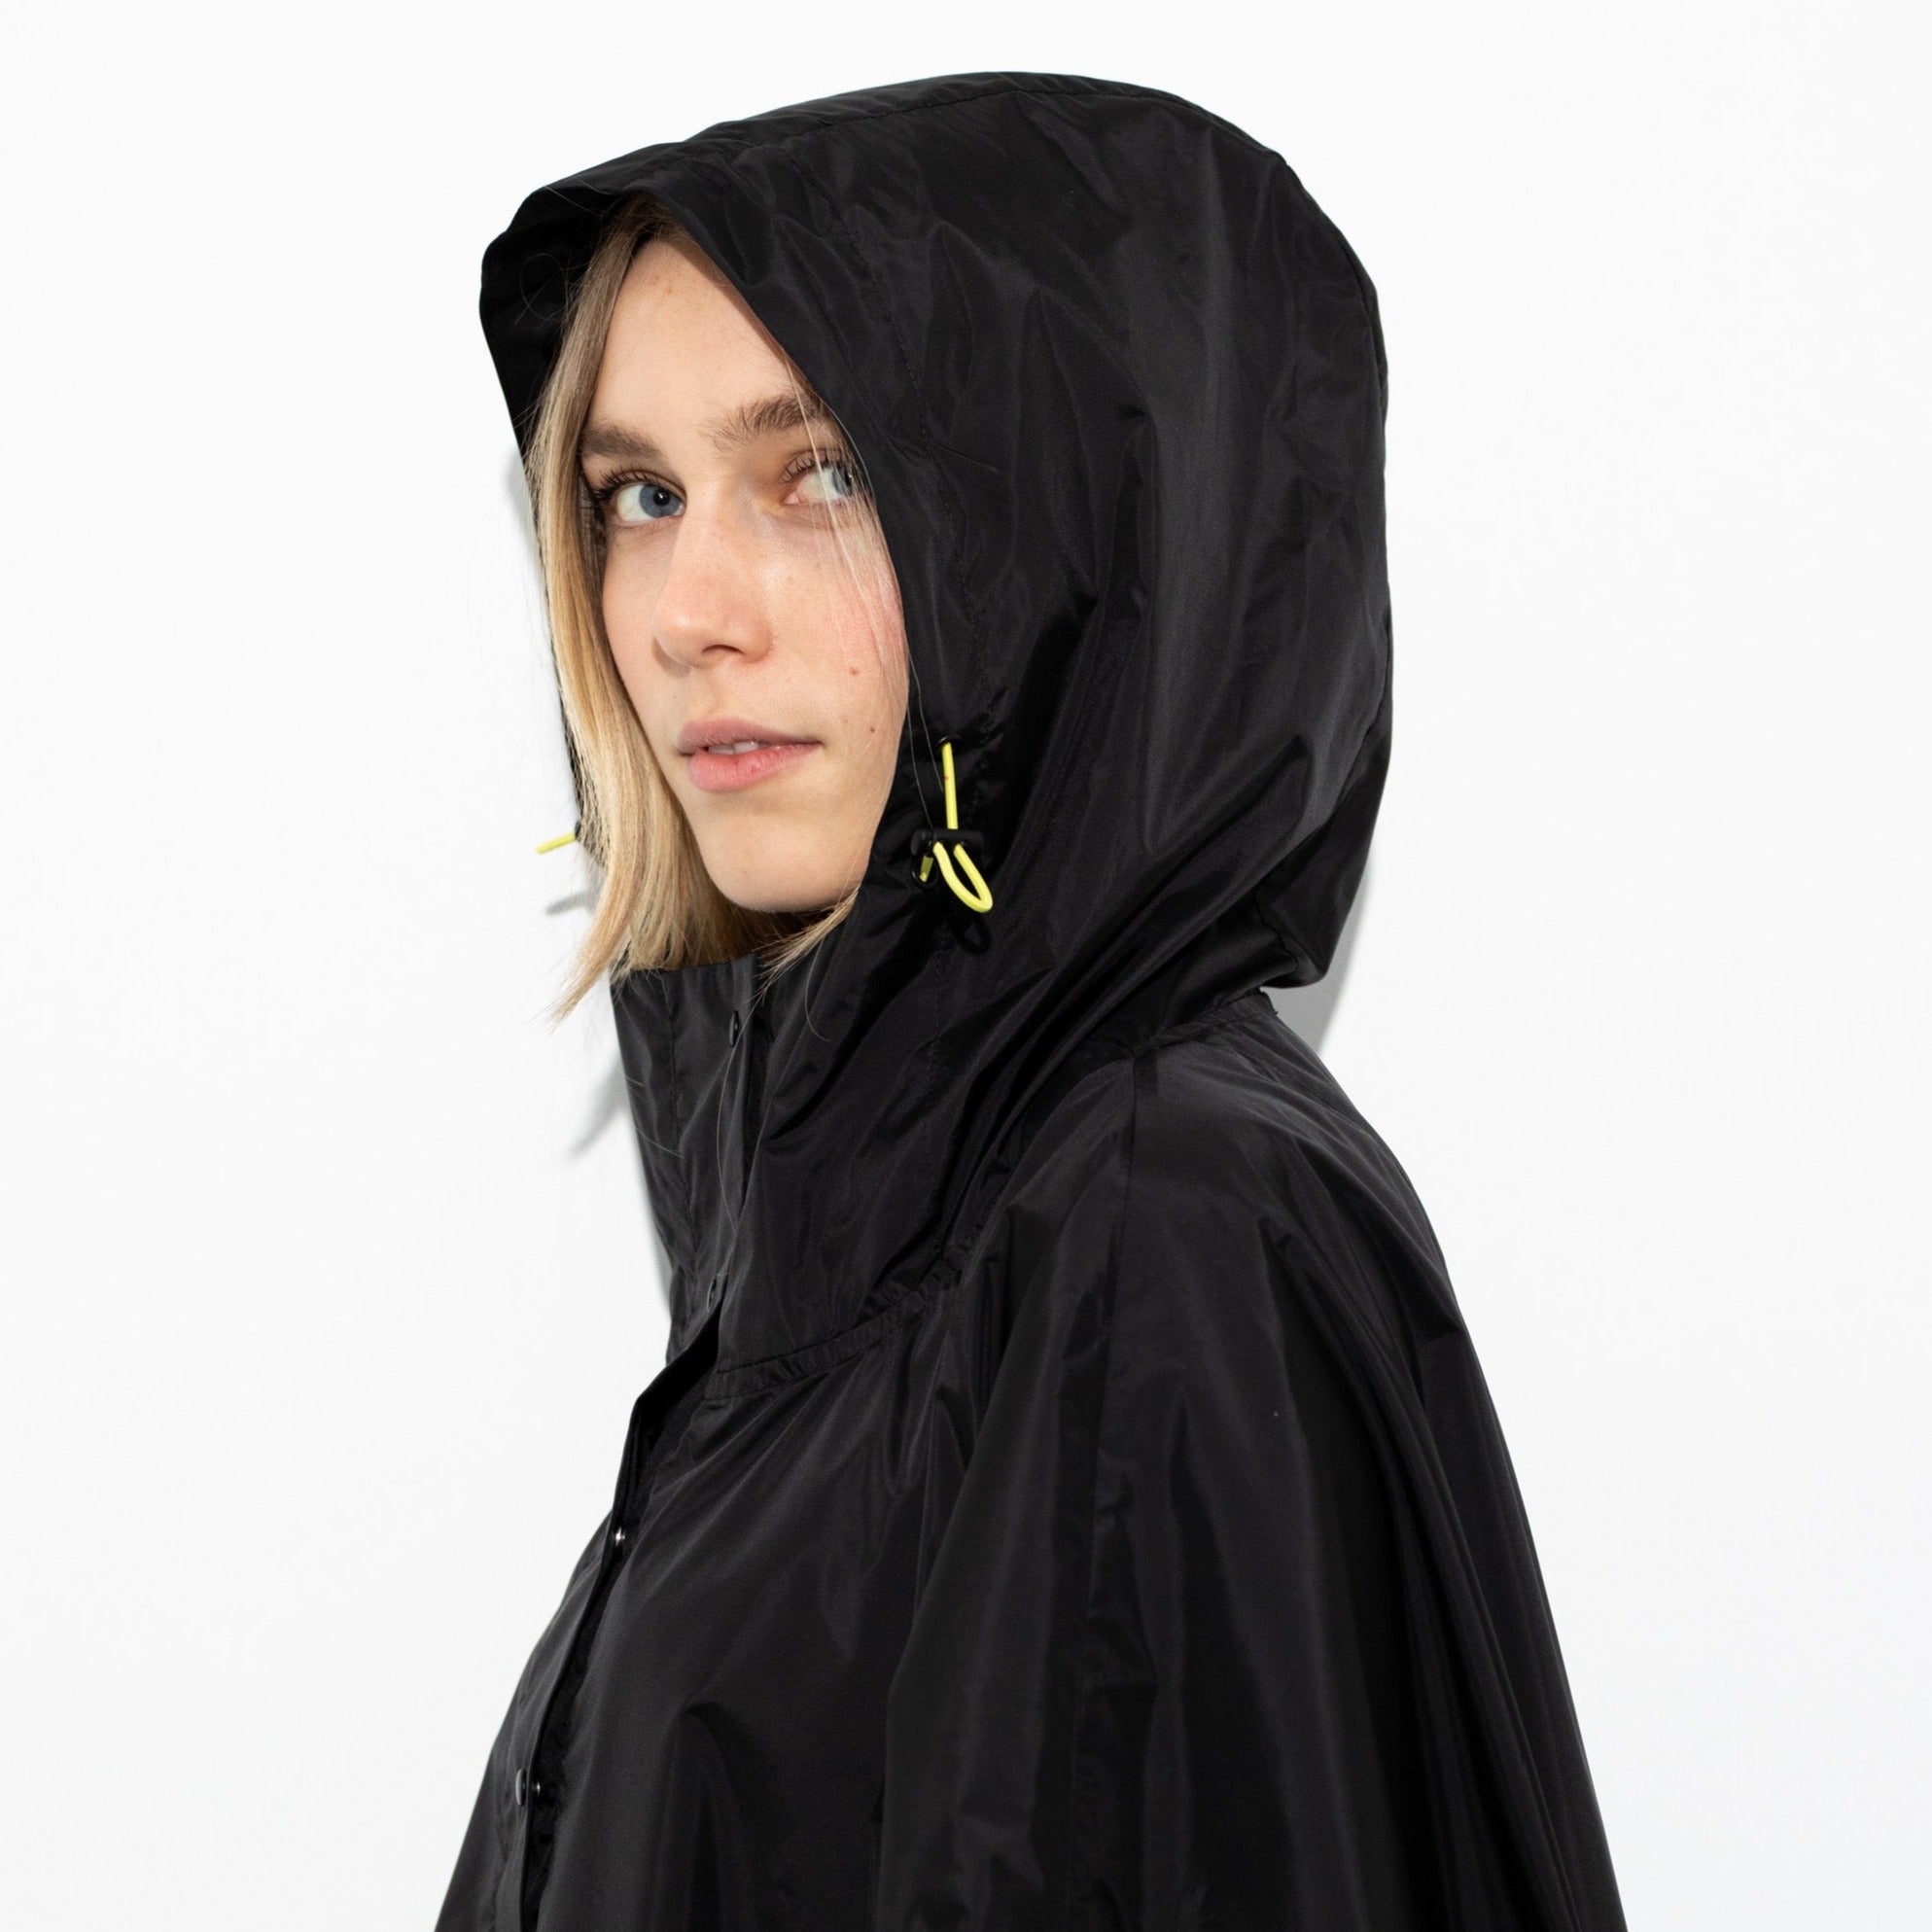 Raincoat solid black - VIVI MARI